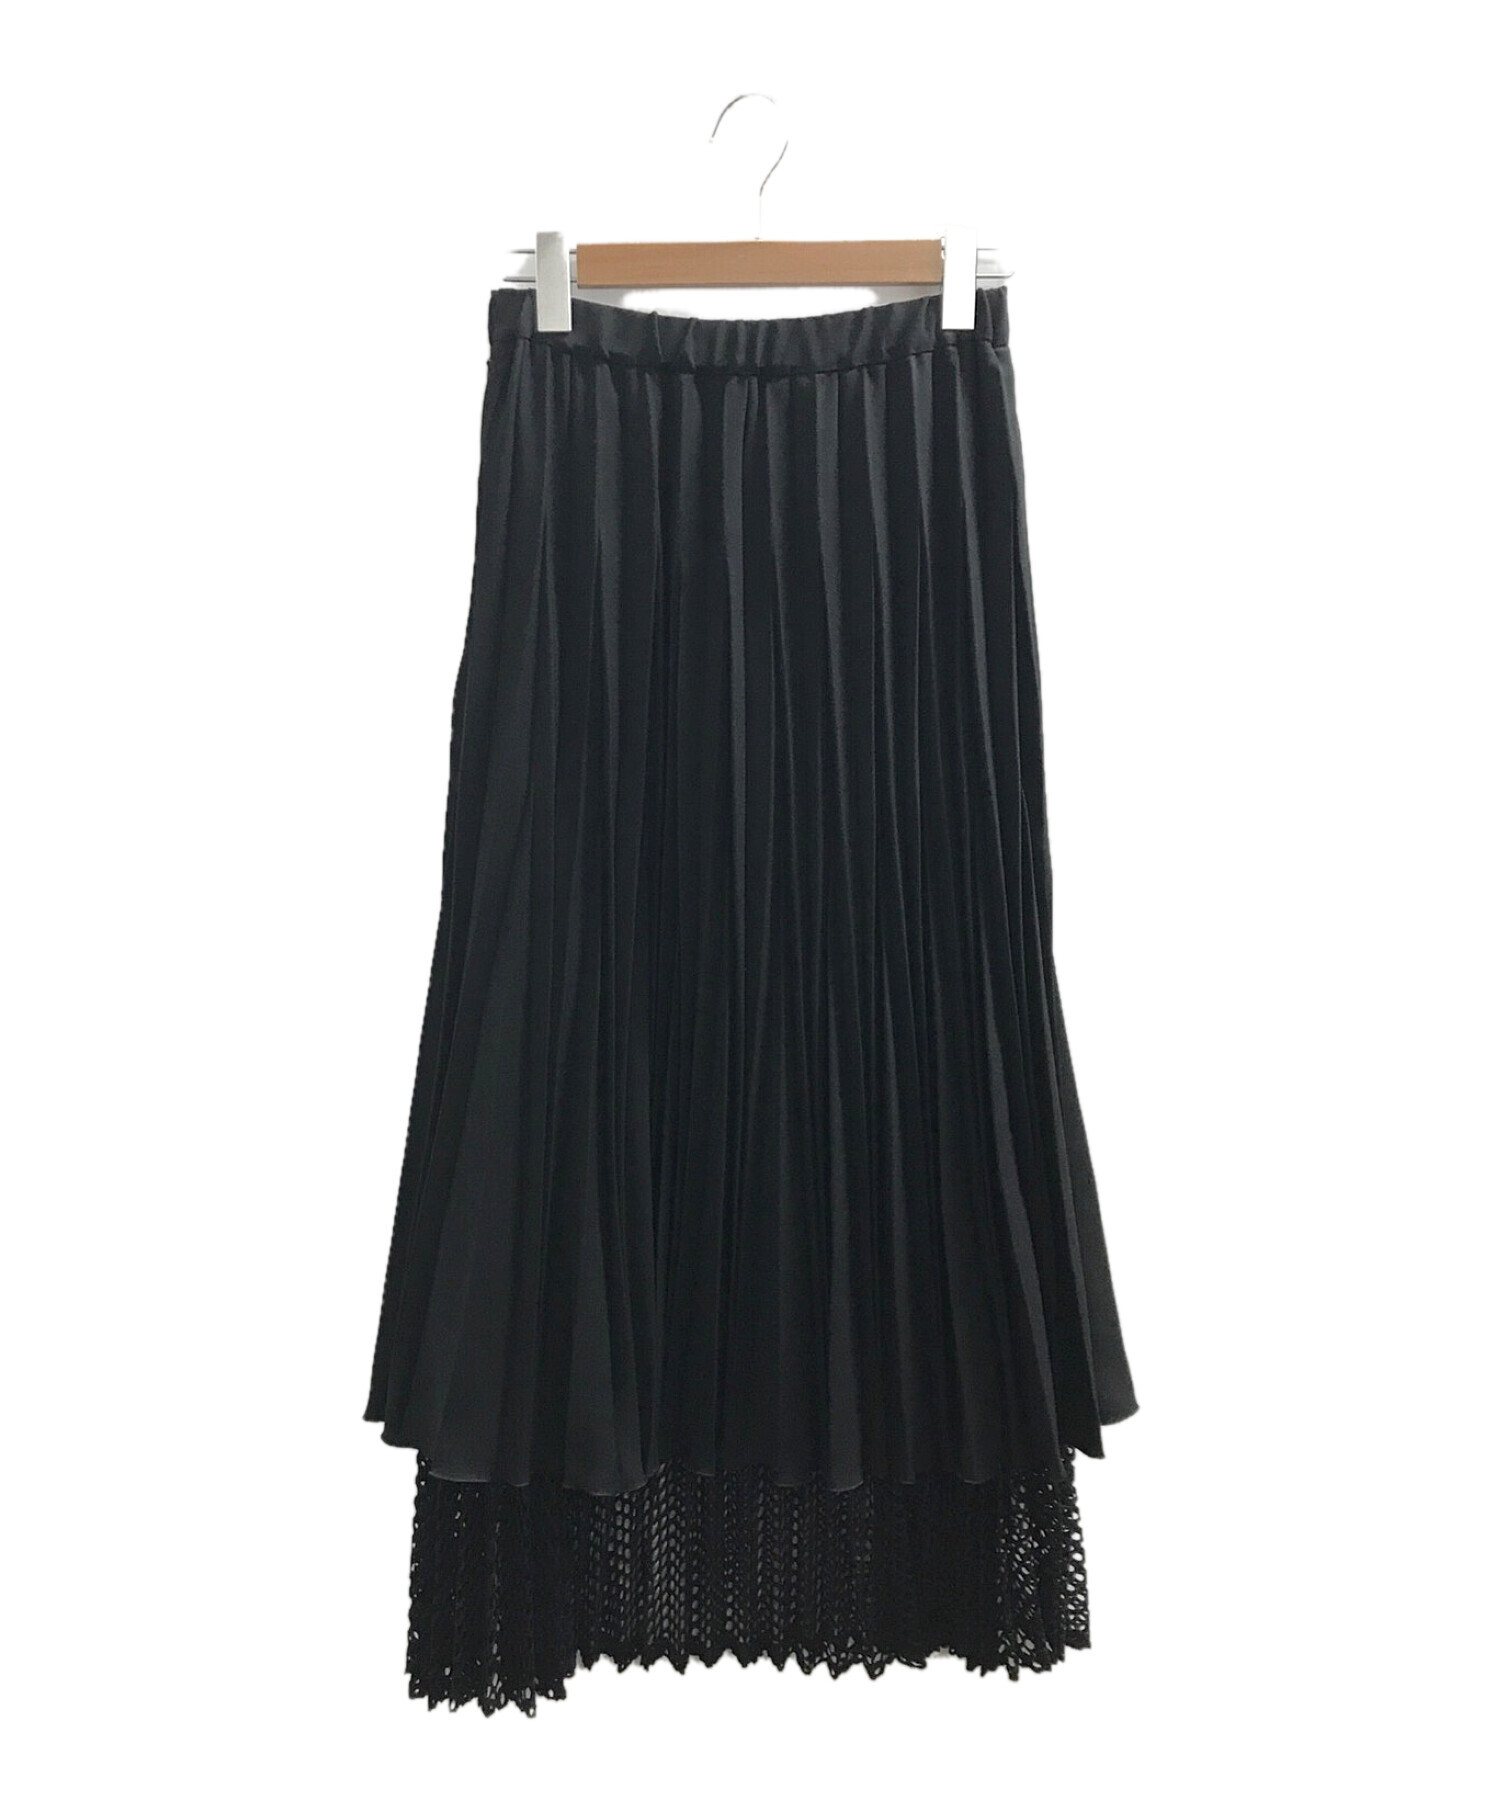 UN3D. (アンスリード) メッシュドッキングオリガミプリーツスカート ブラック サイズ:38